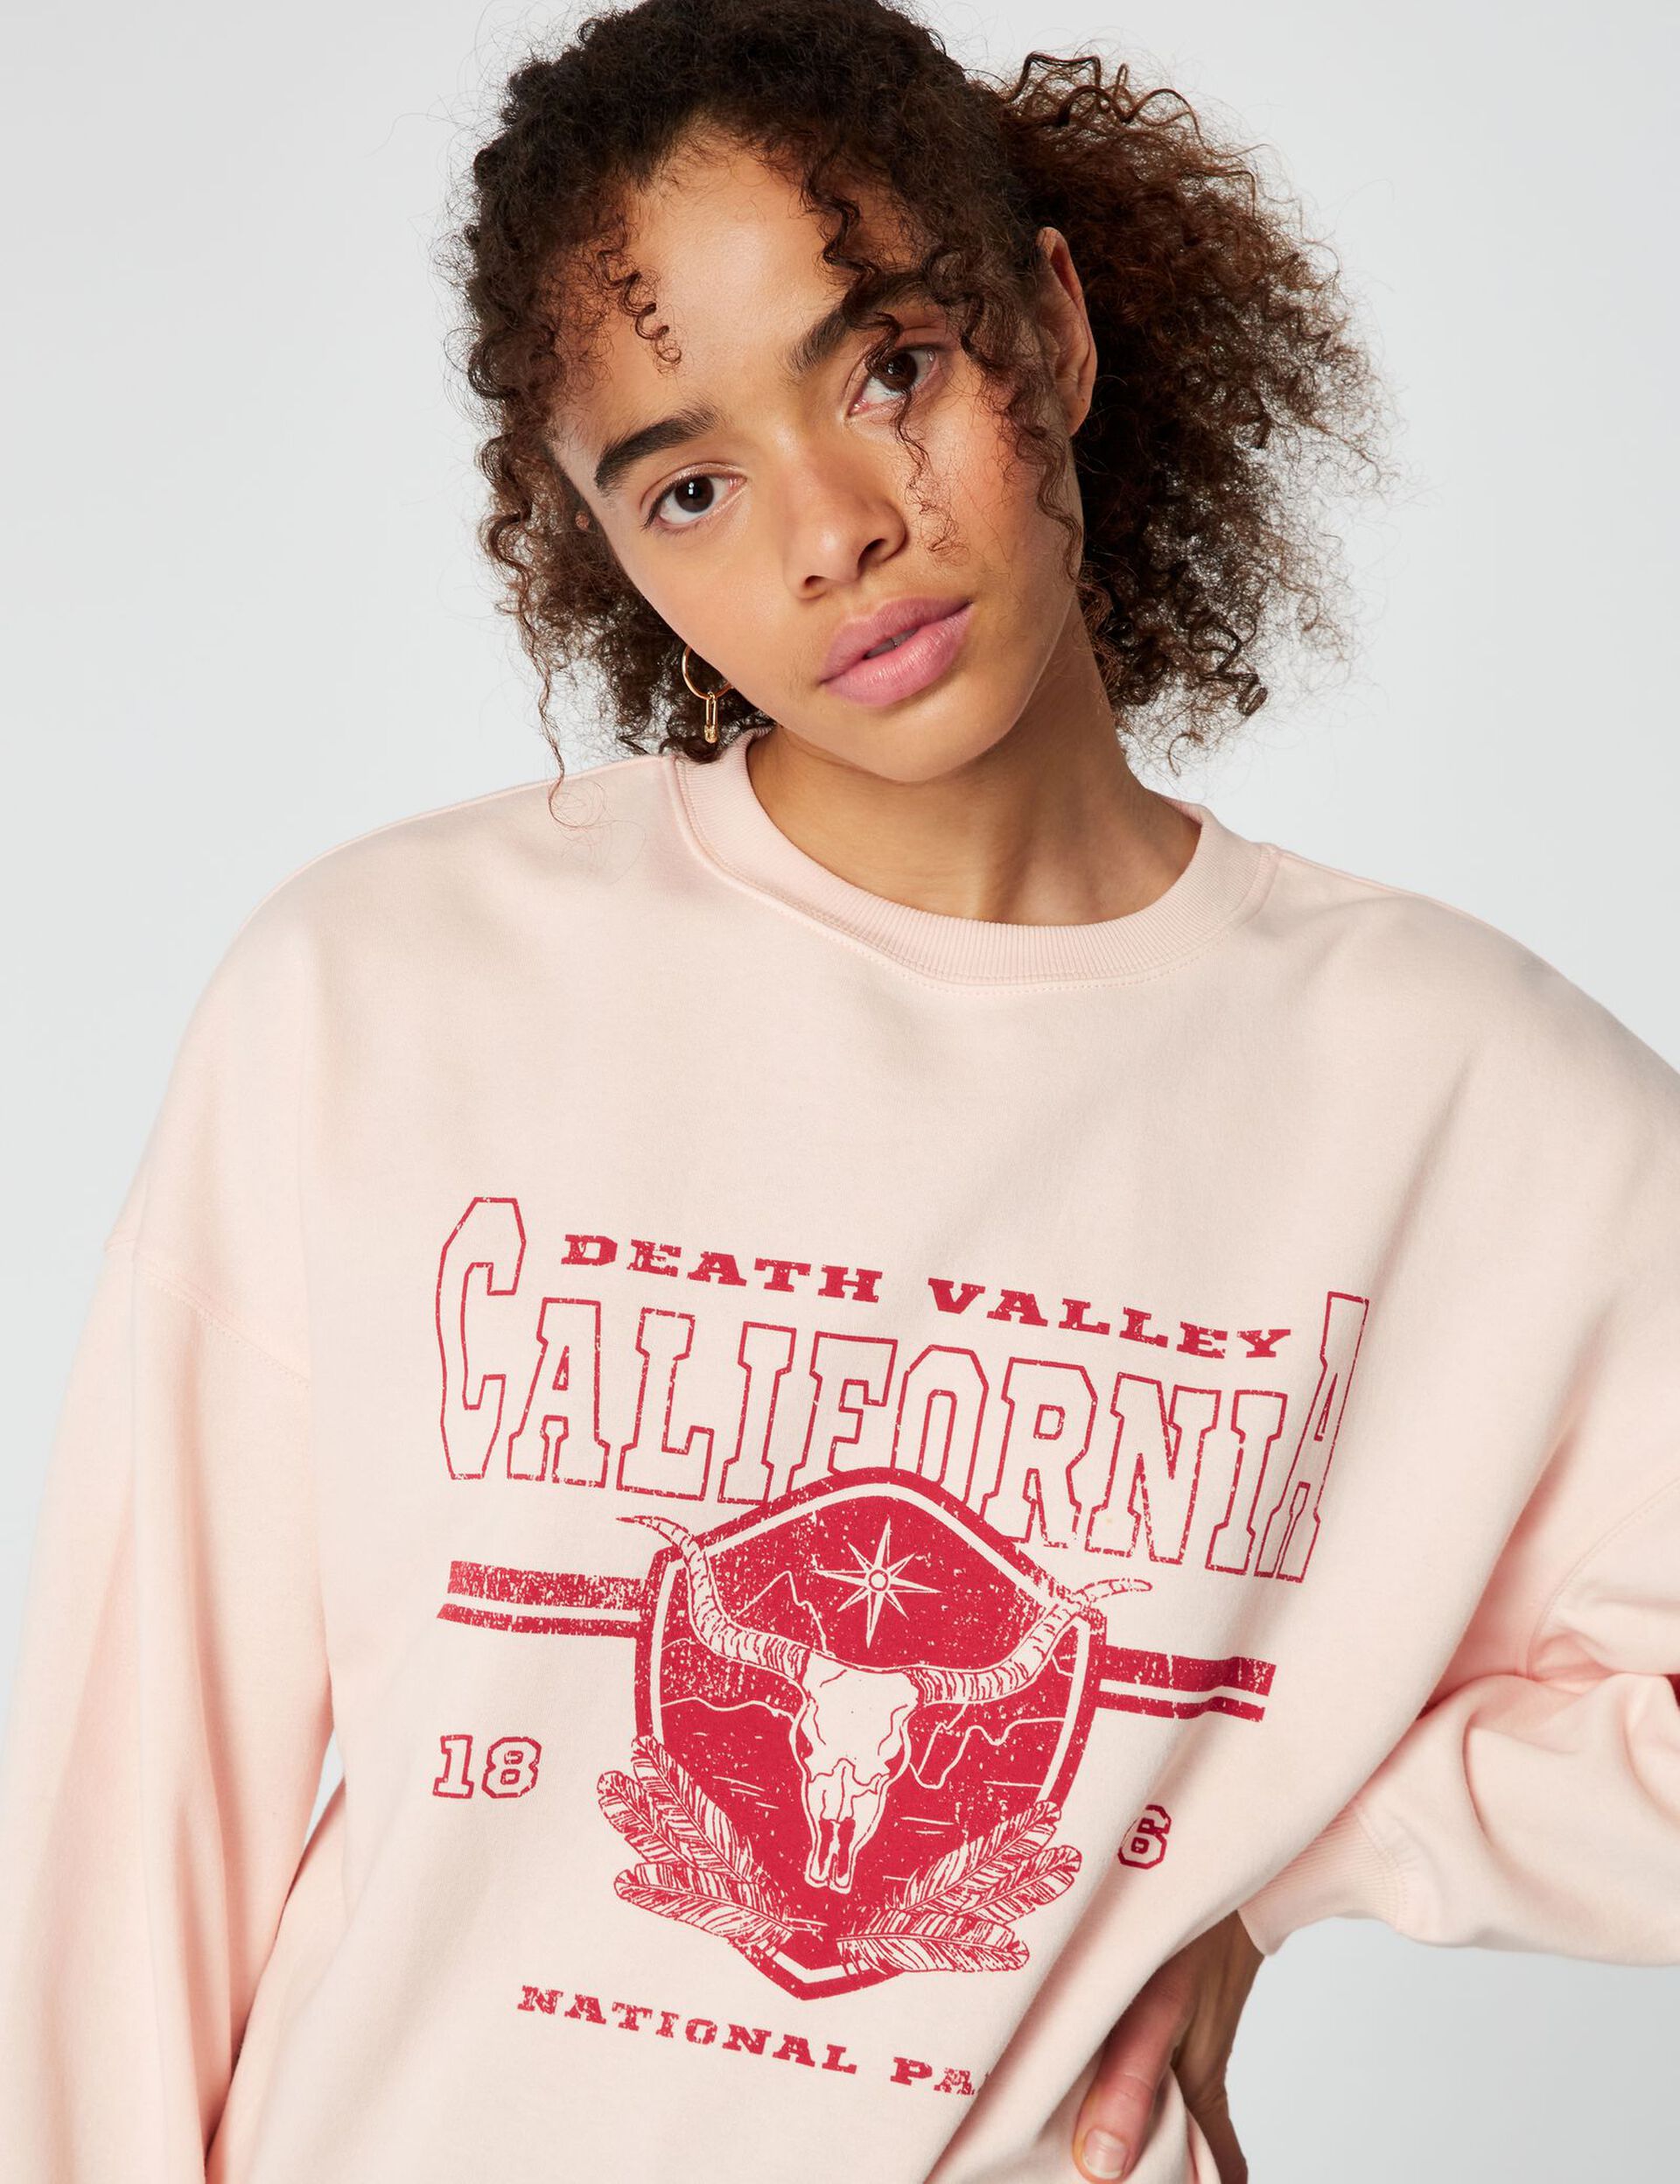 Death Valley sweatshirt